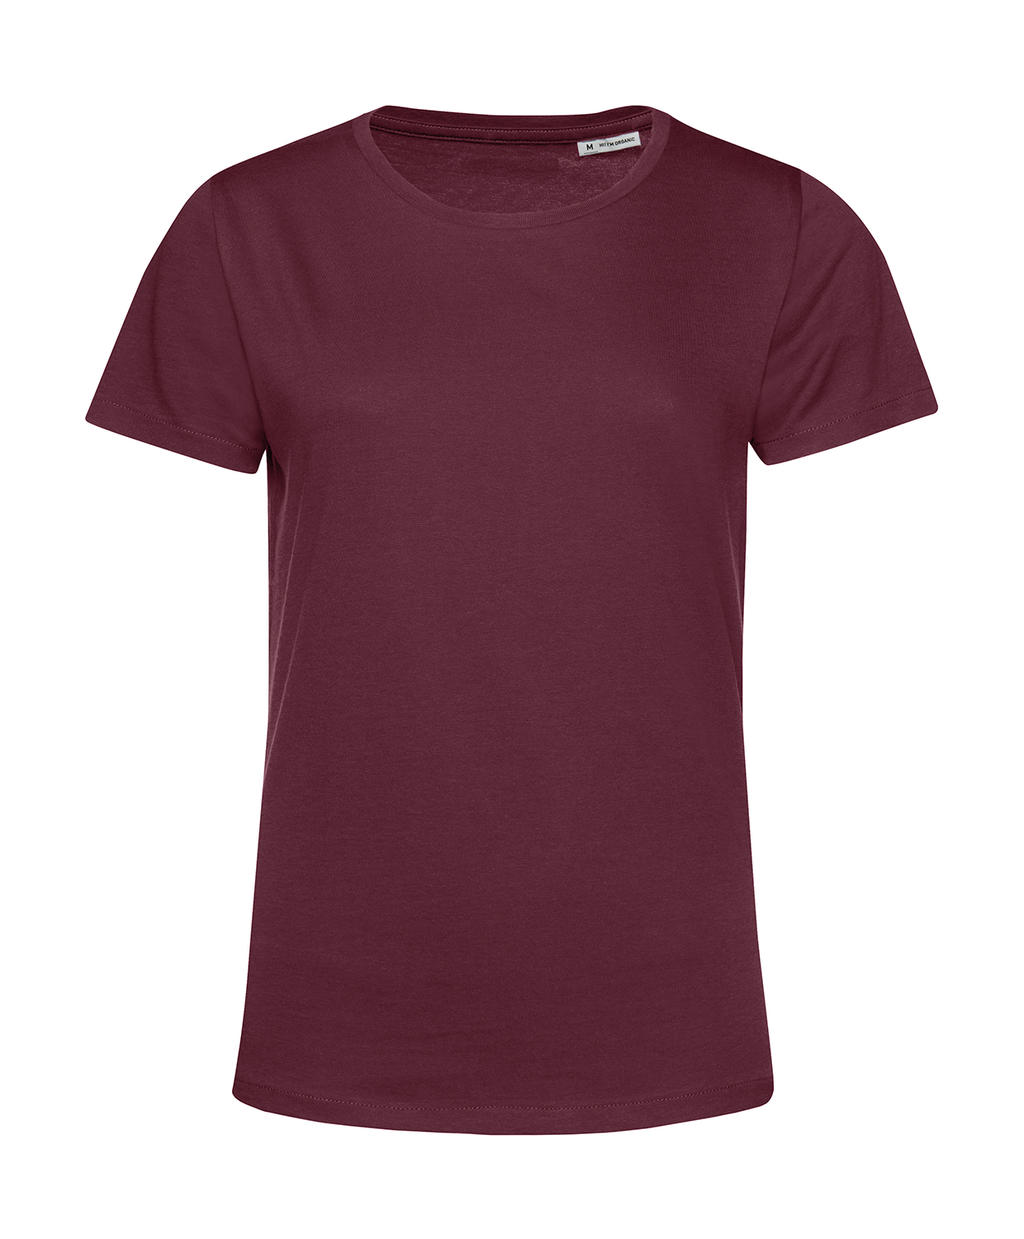 Tričko dámské BC Organic Inspire E150 - tmavě červené, XL